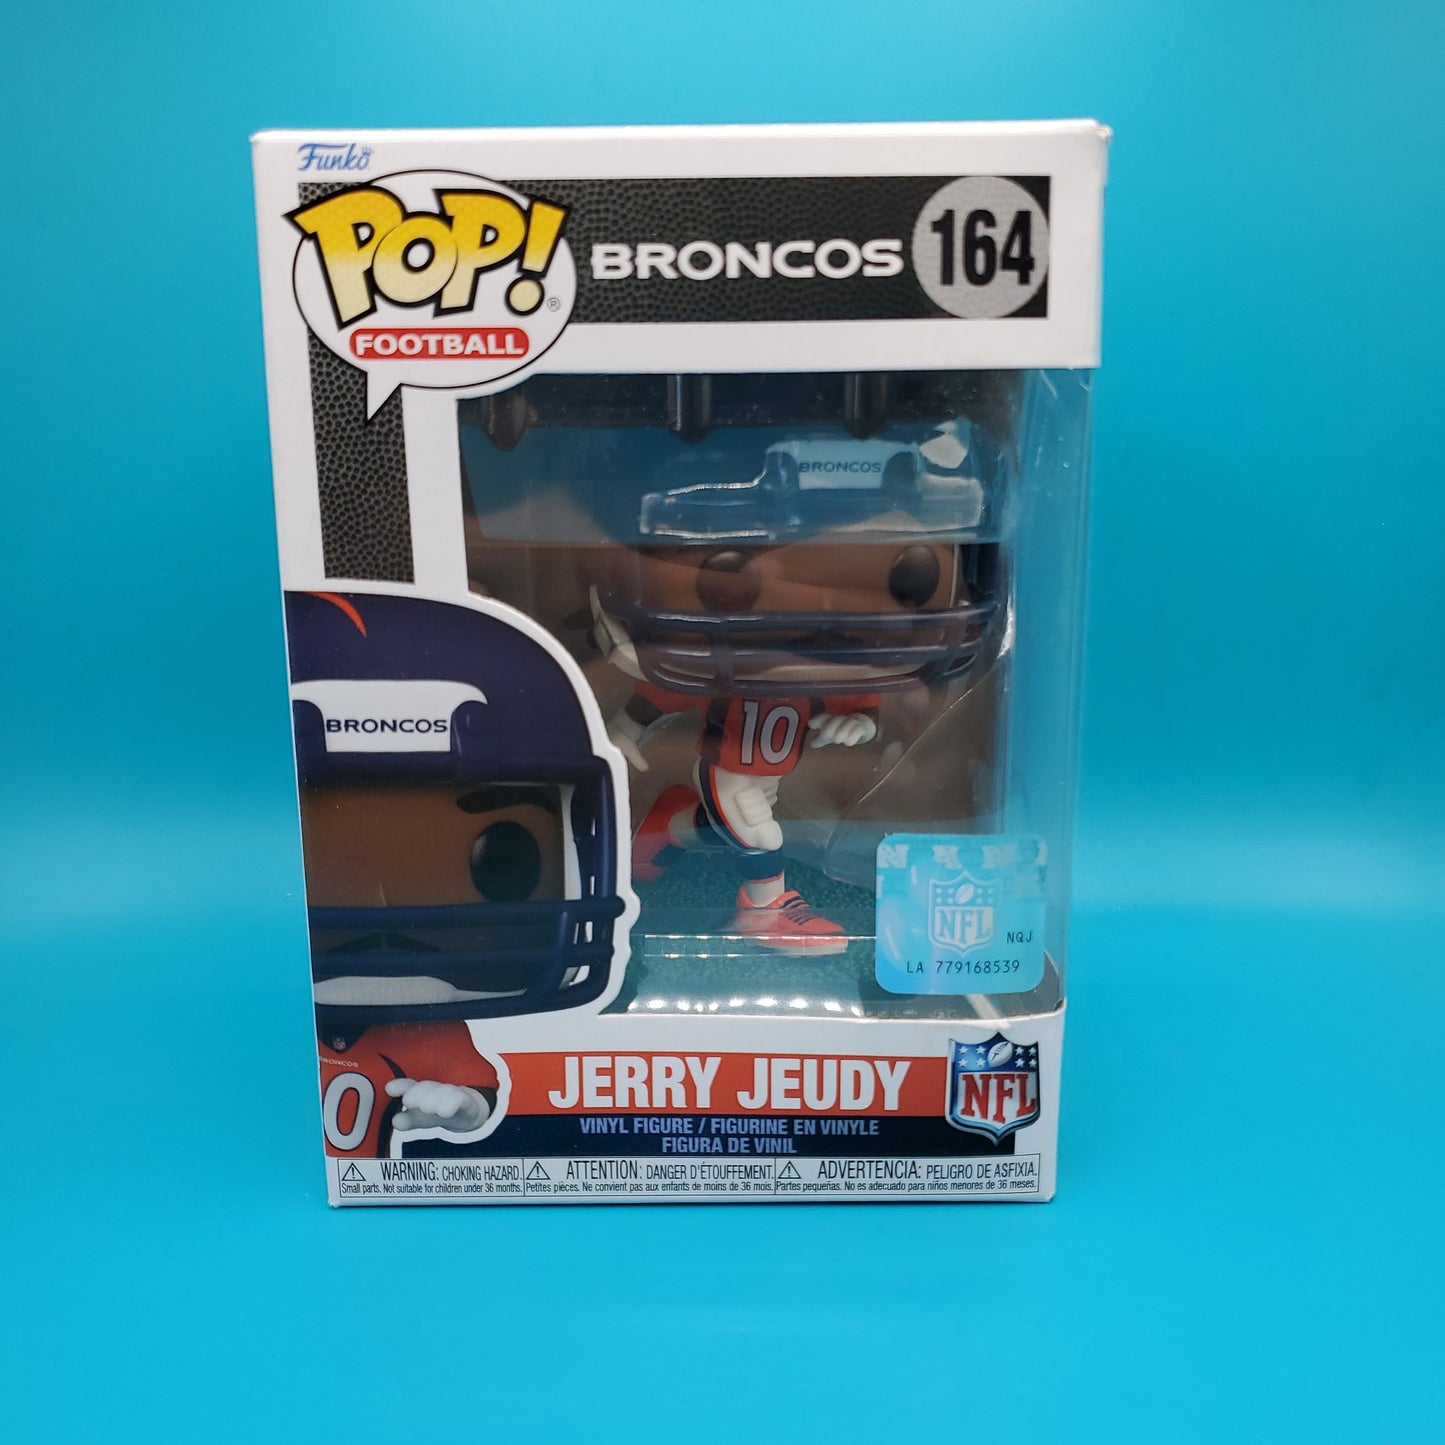 Jerry Jeudy - 164 - NFL